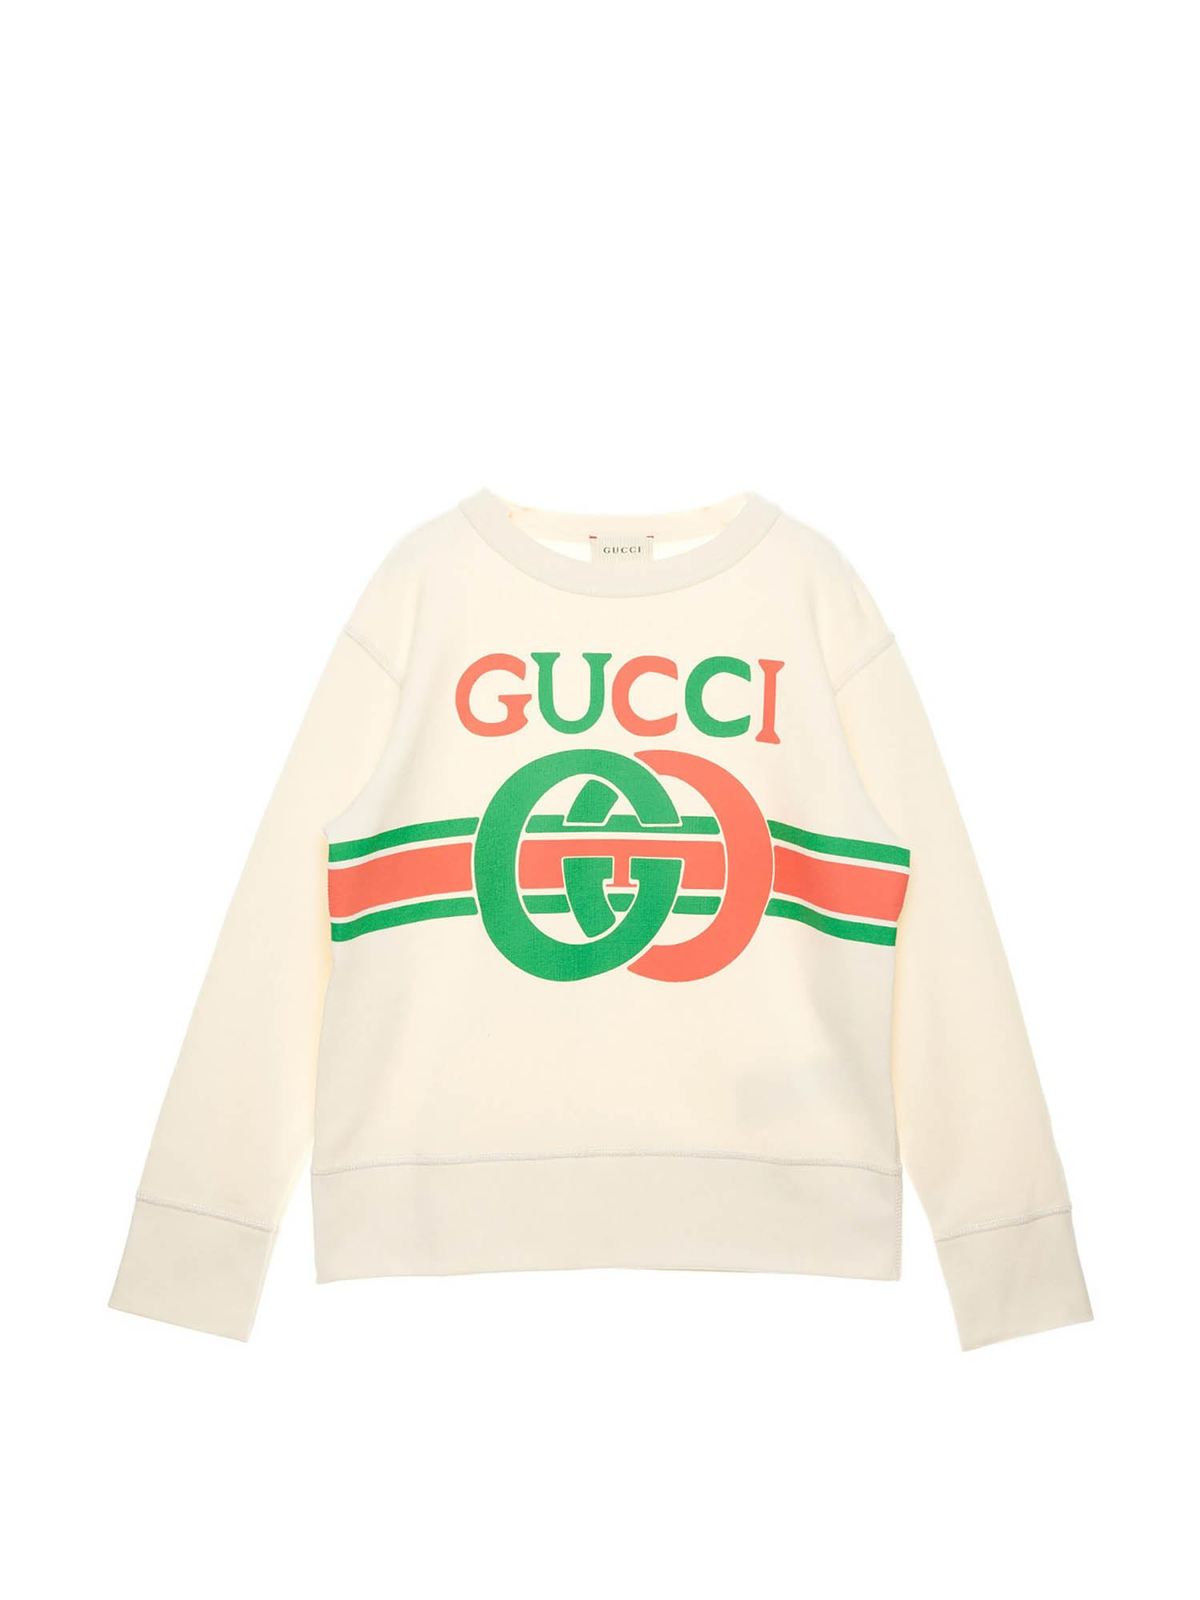 Gucci - GG crewneck sweatshirt in white 